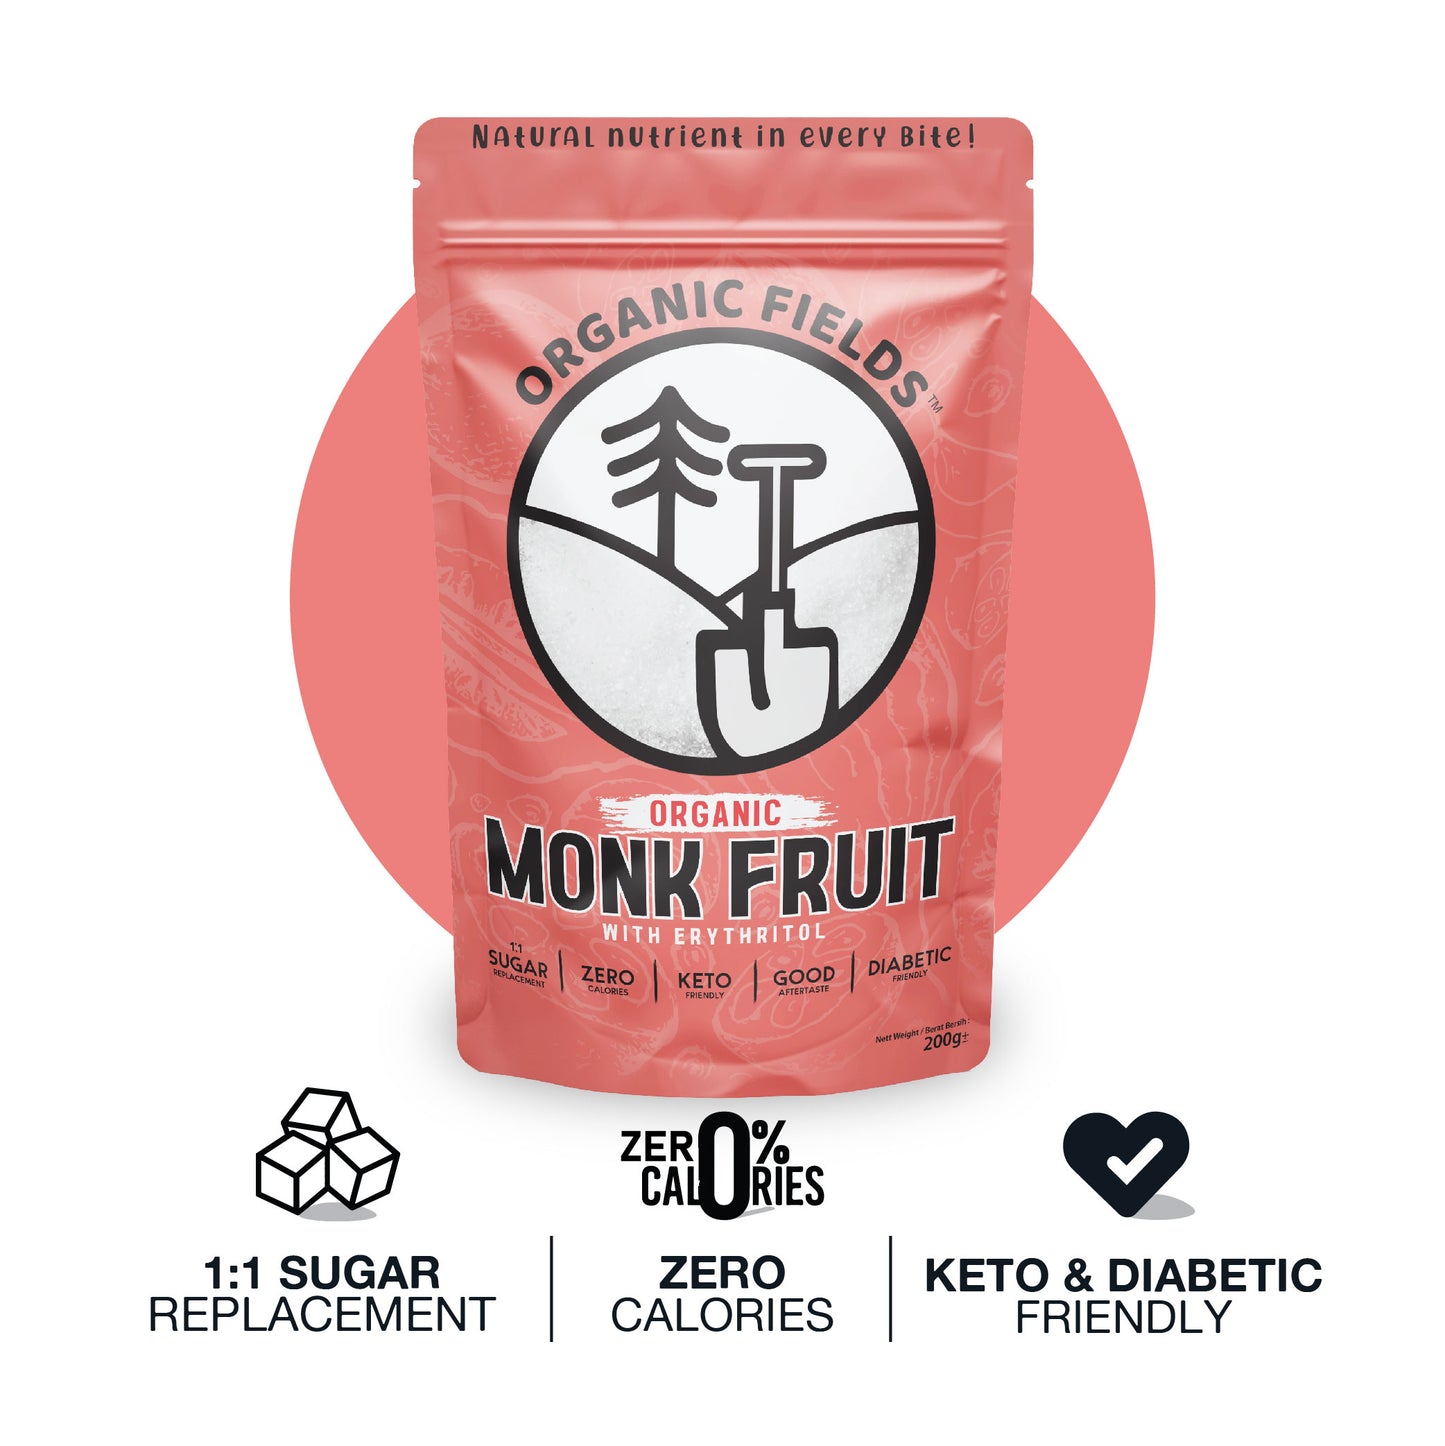 Monk Fruit sweetener with erythritol